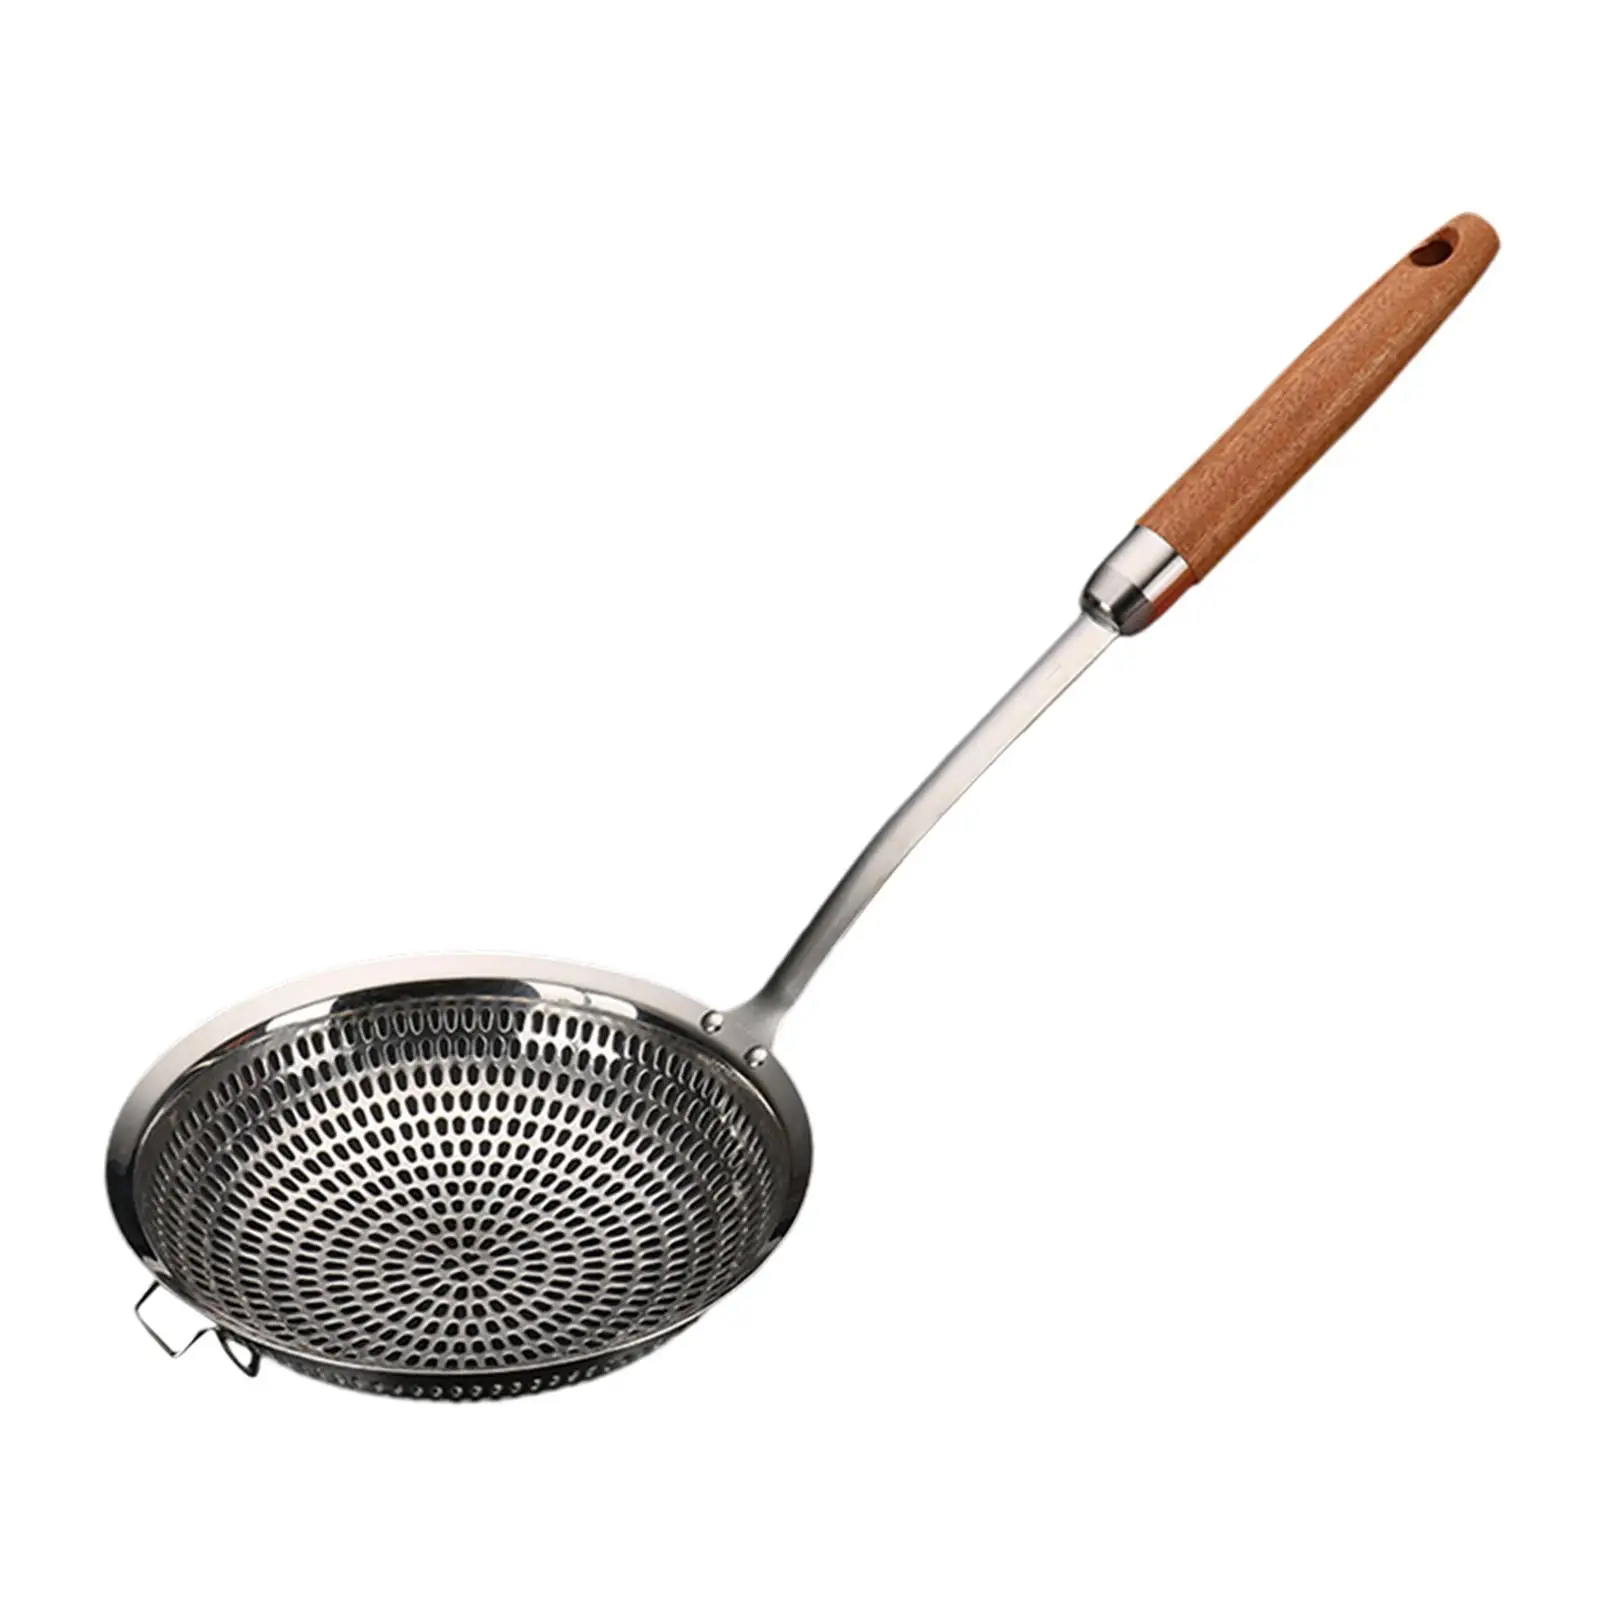 Skimmer Spoon Cooking Colander Spoon Strainer Ladle Noodle Strainer Spoon for